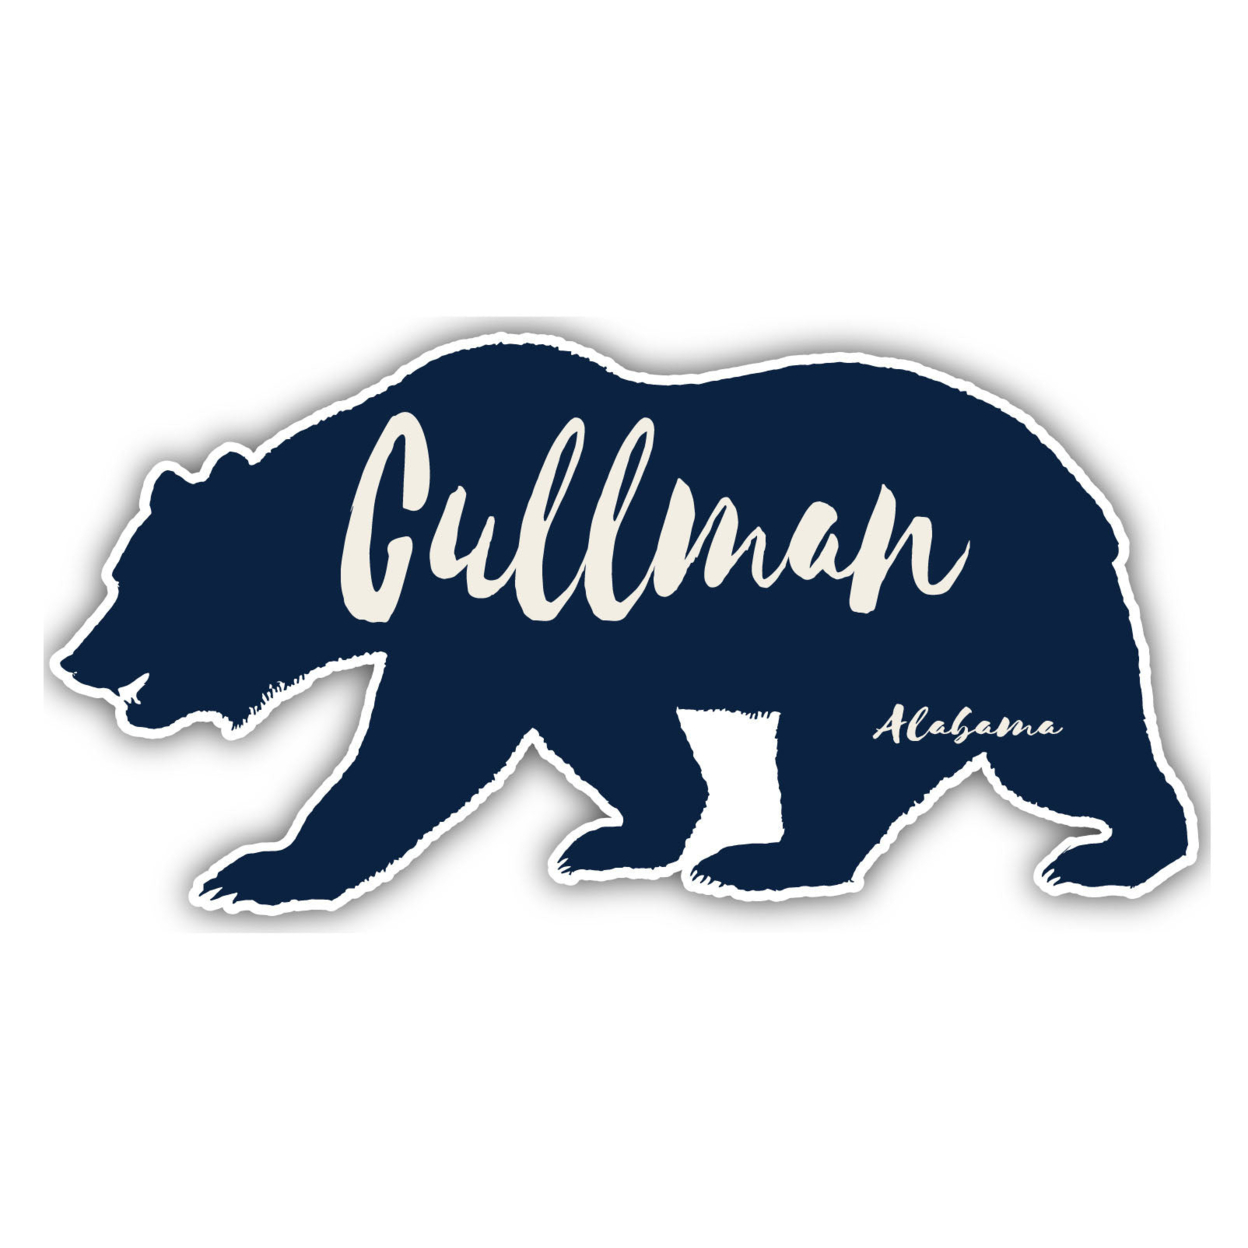 Cullman Alabama Souvenir Decorative Stickers (Choose Theme And Size) - Single Unit, 6-Inch, Bear